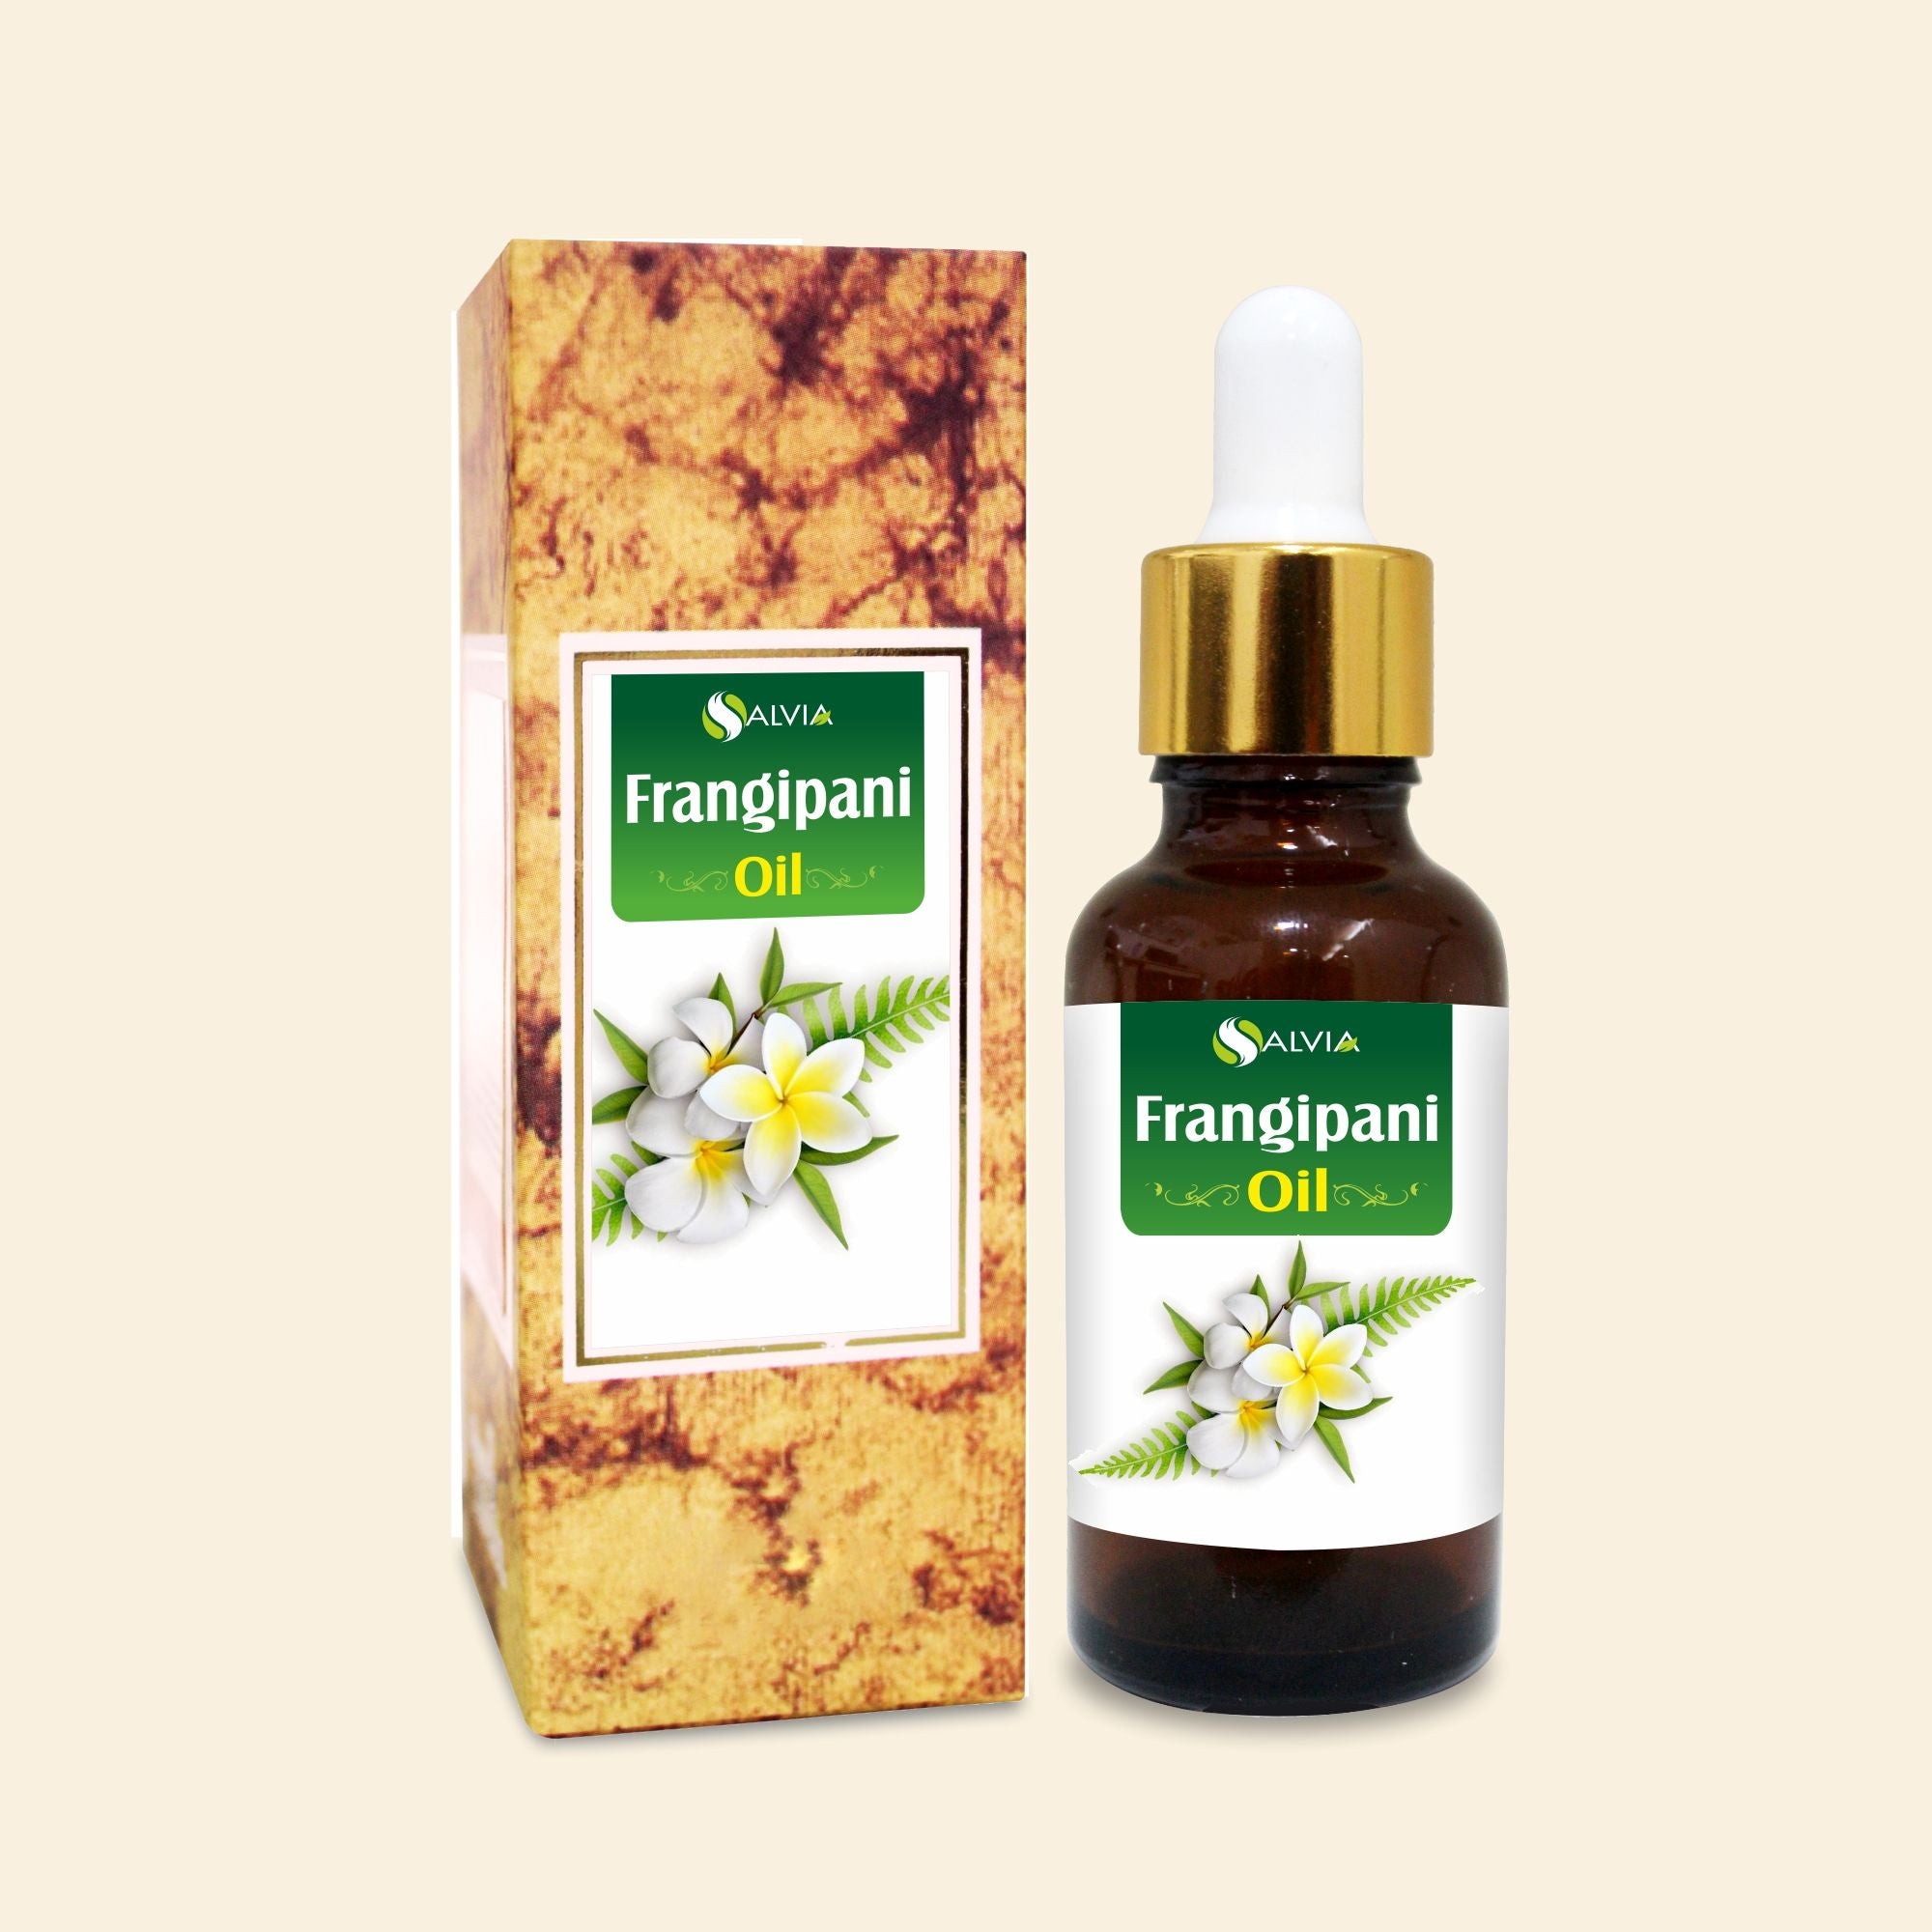 Salvia Natural Essential Oils Frangipani Oil (Plumeria species) 100% Natural Essential Oil